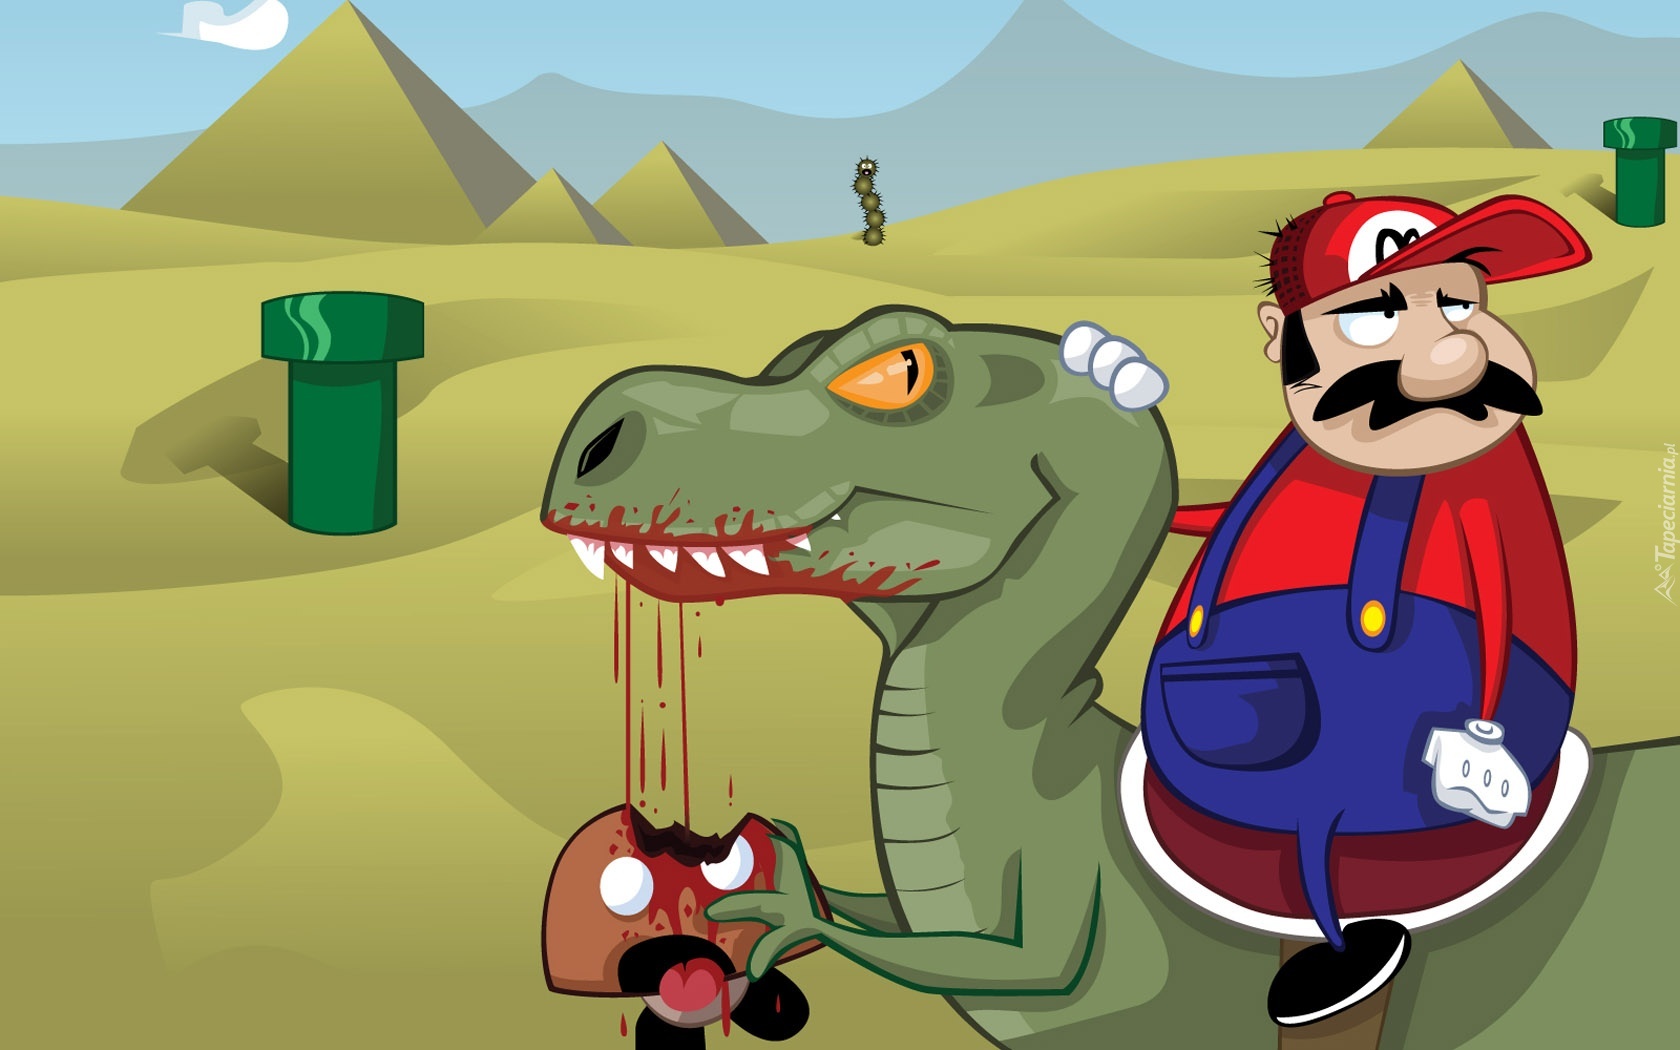 Mario, Dinozaur, Krew